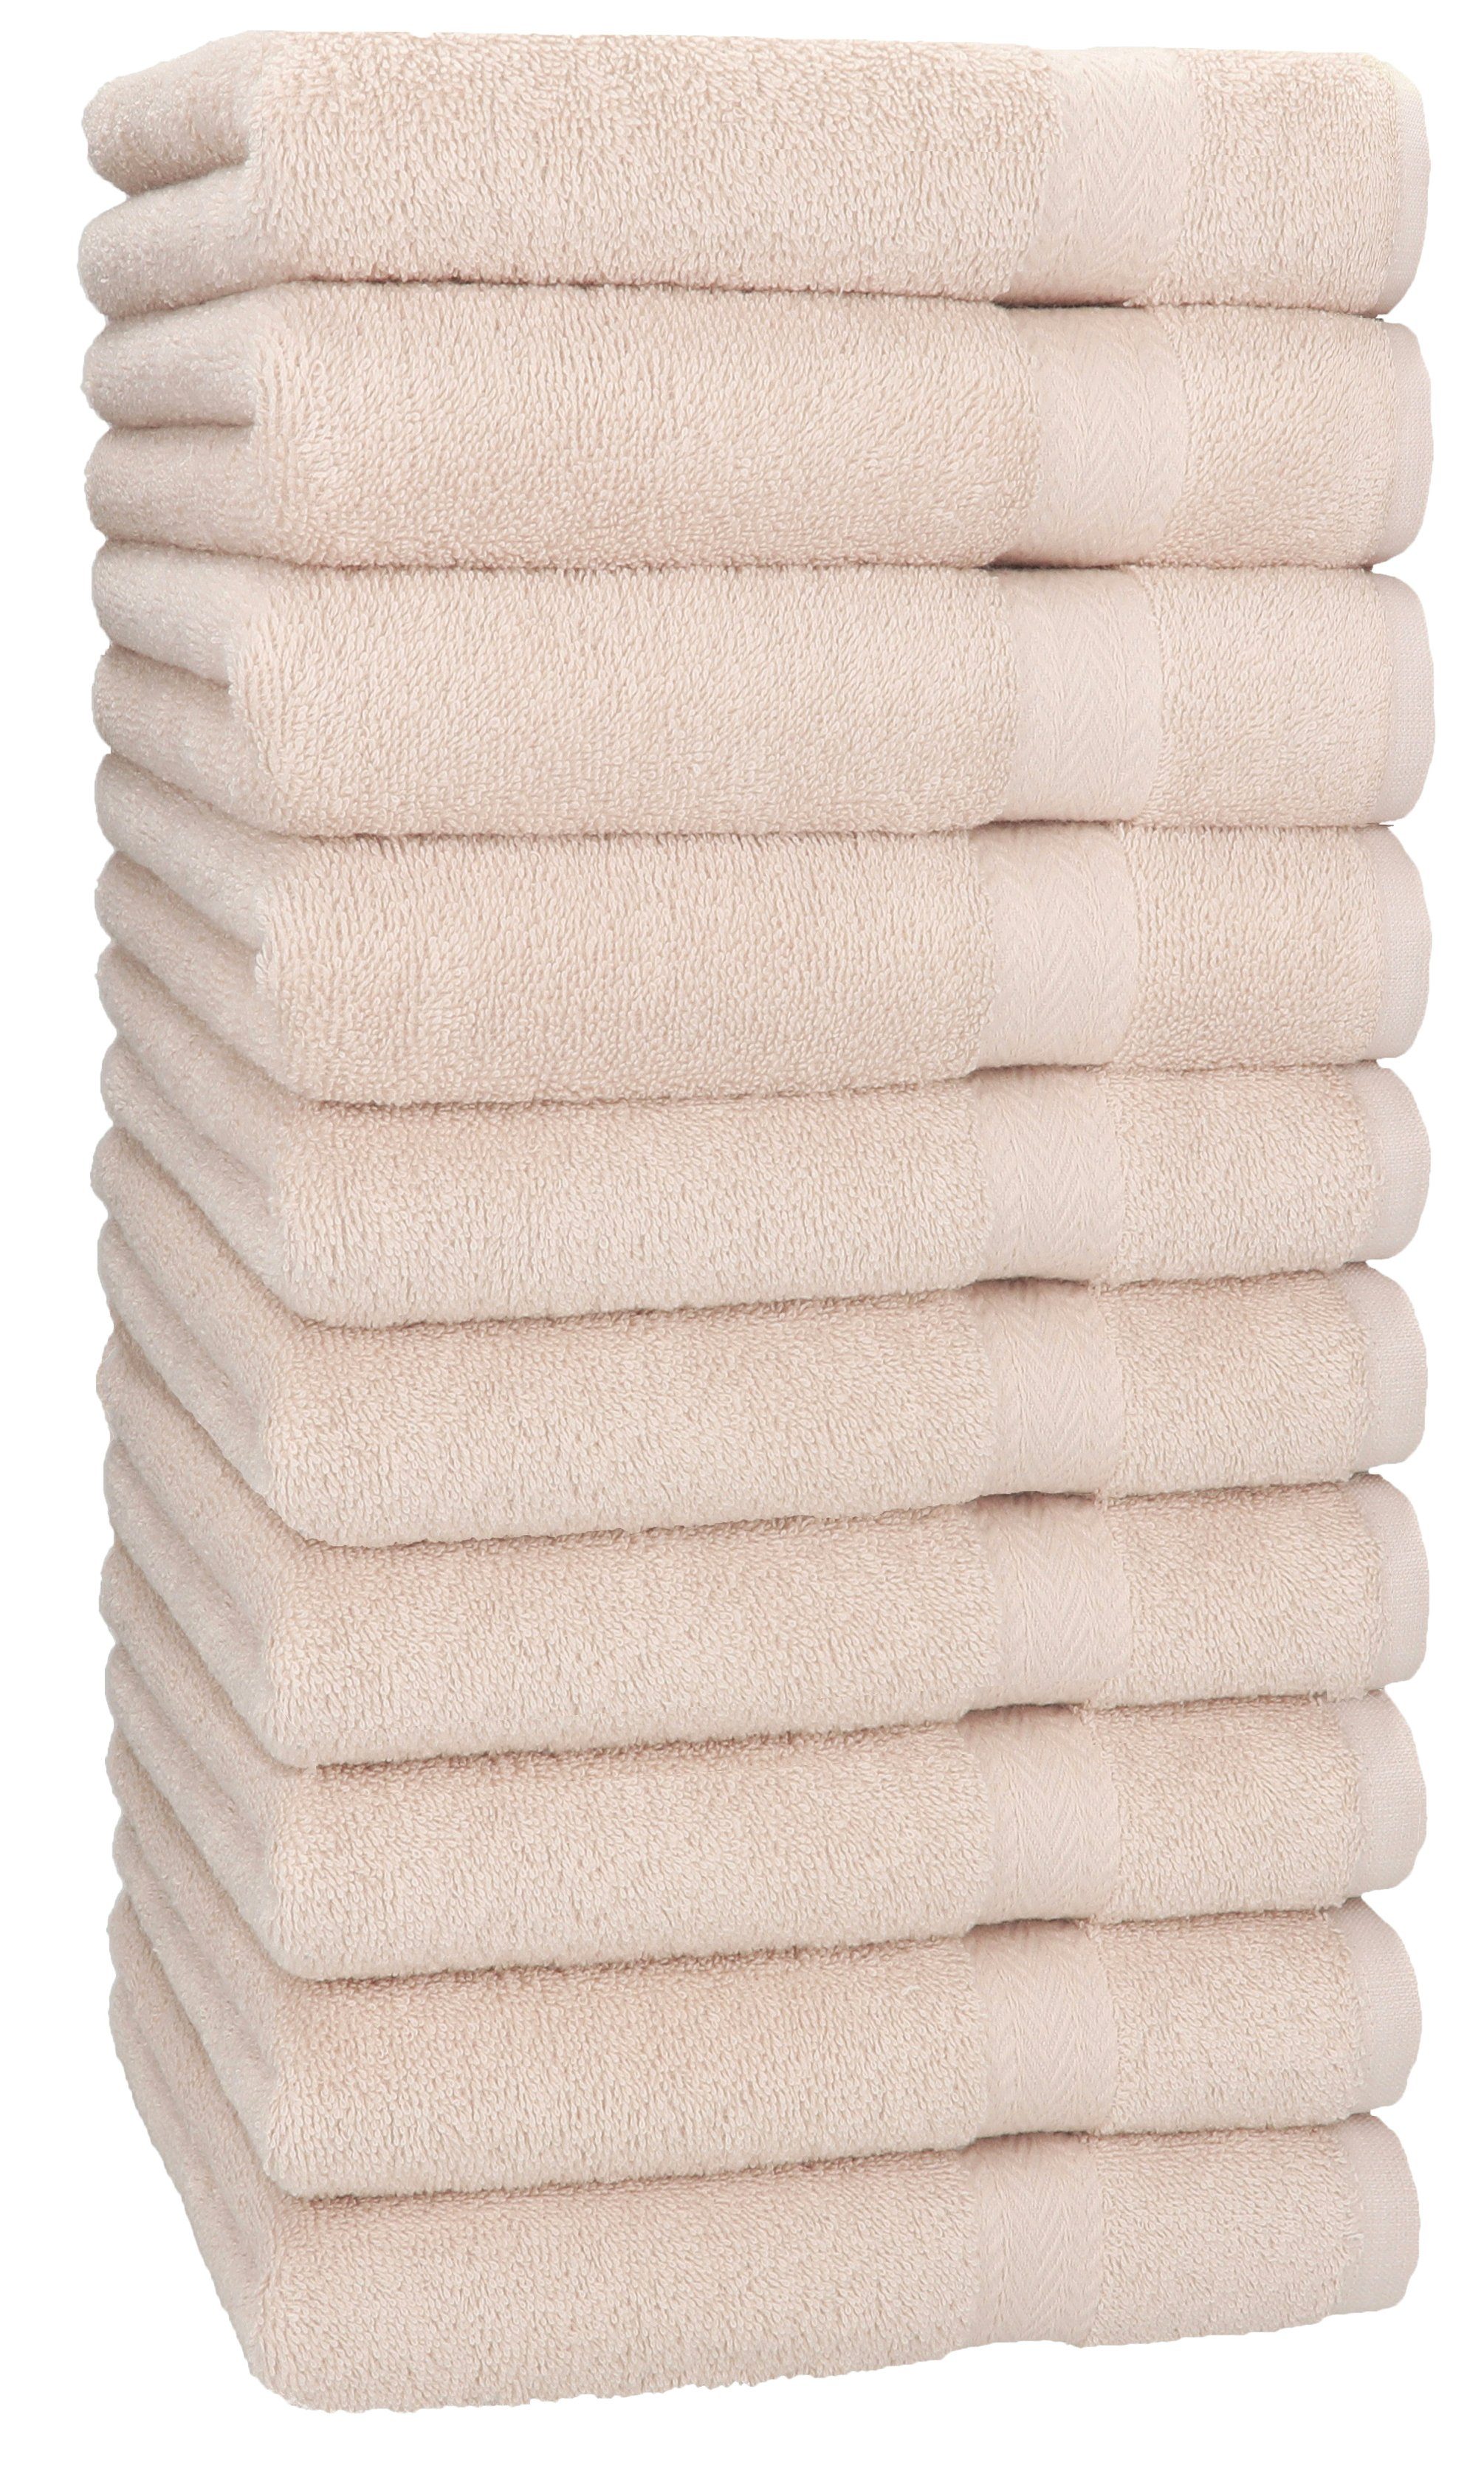 Betz Handtücher 10 Stück Handtücher Premium Größe 50x100 cm Farbe Sand, 100% Baumwolle